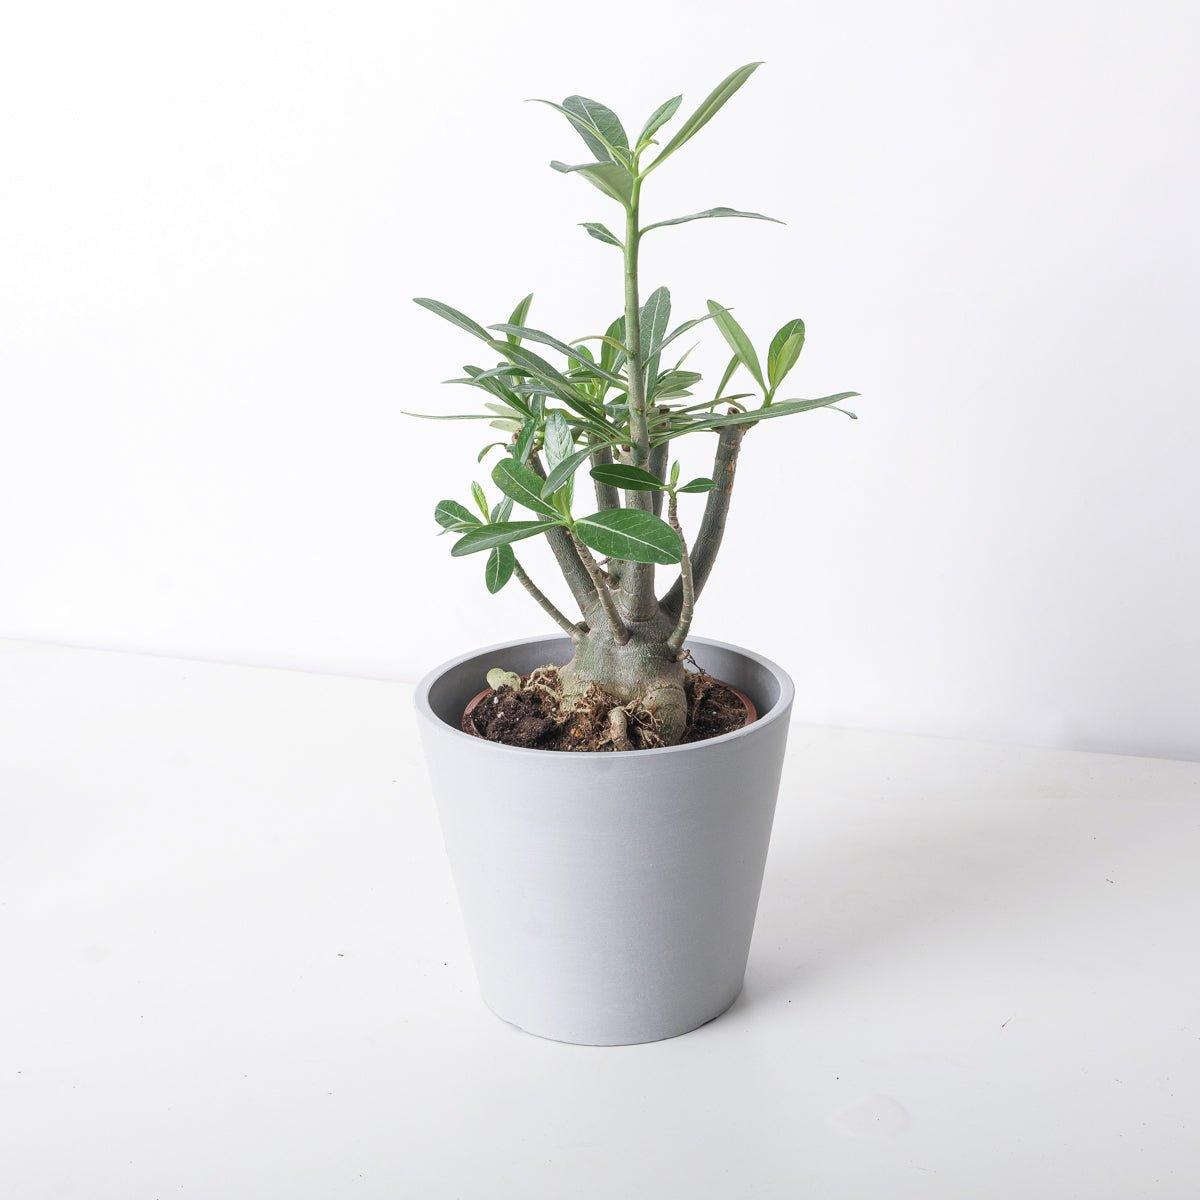 Desert Rose Plant - Adenium obesum - Natural Bonsai or House Plant - 4 Pot